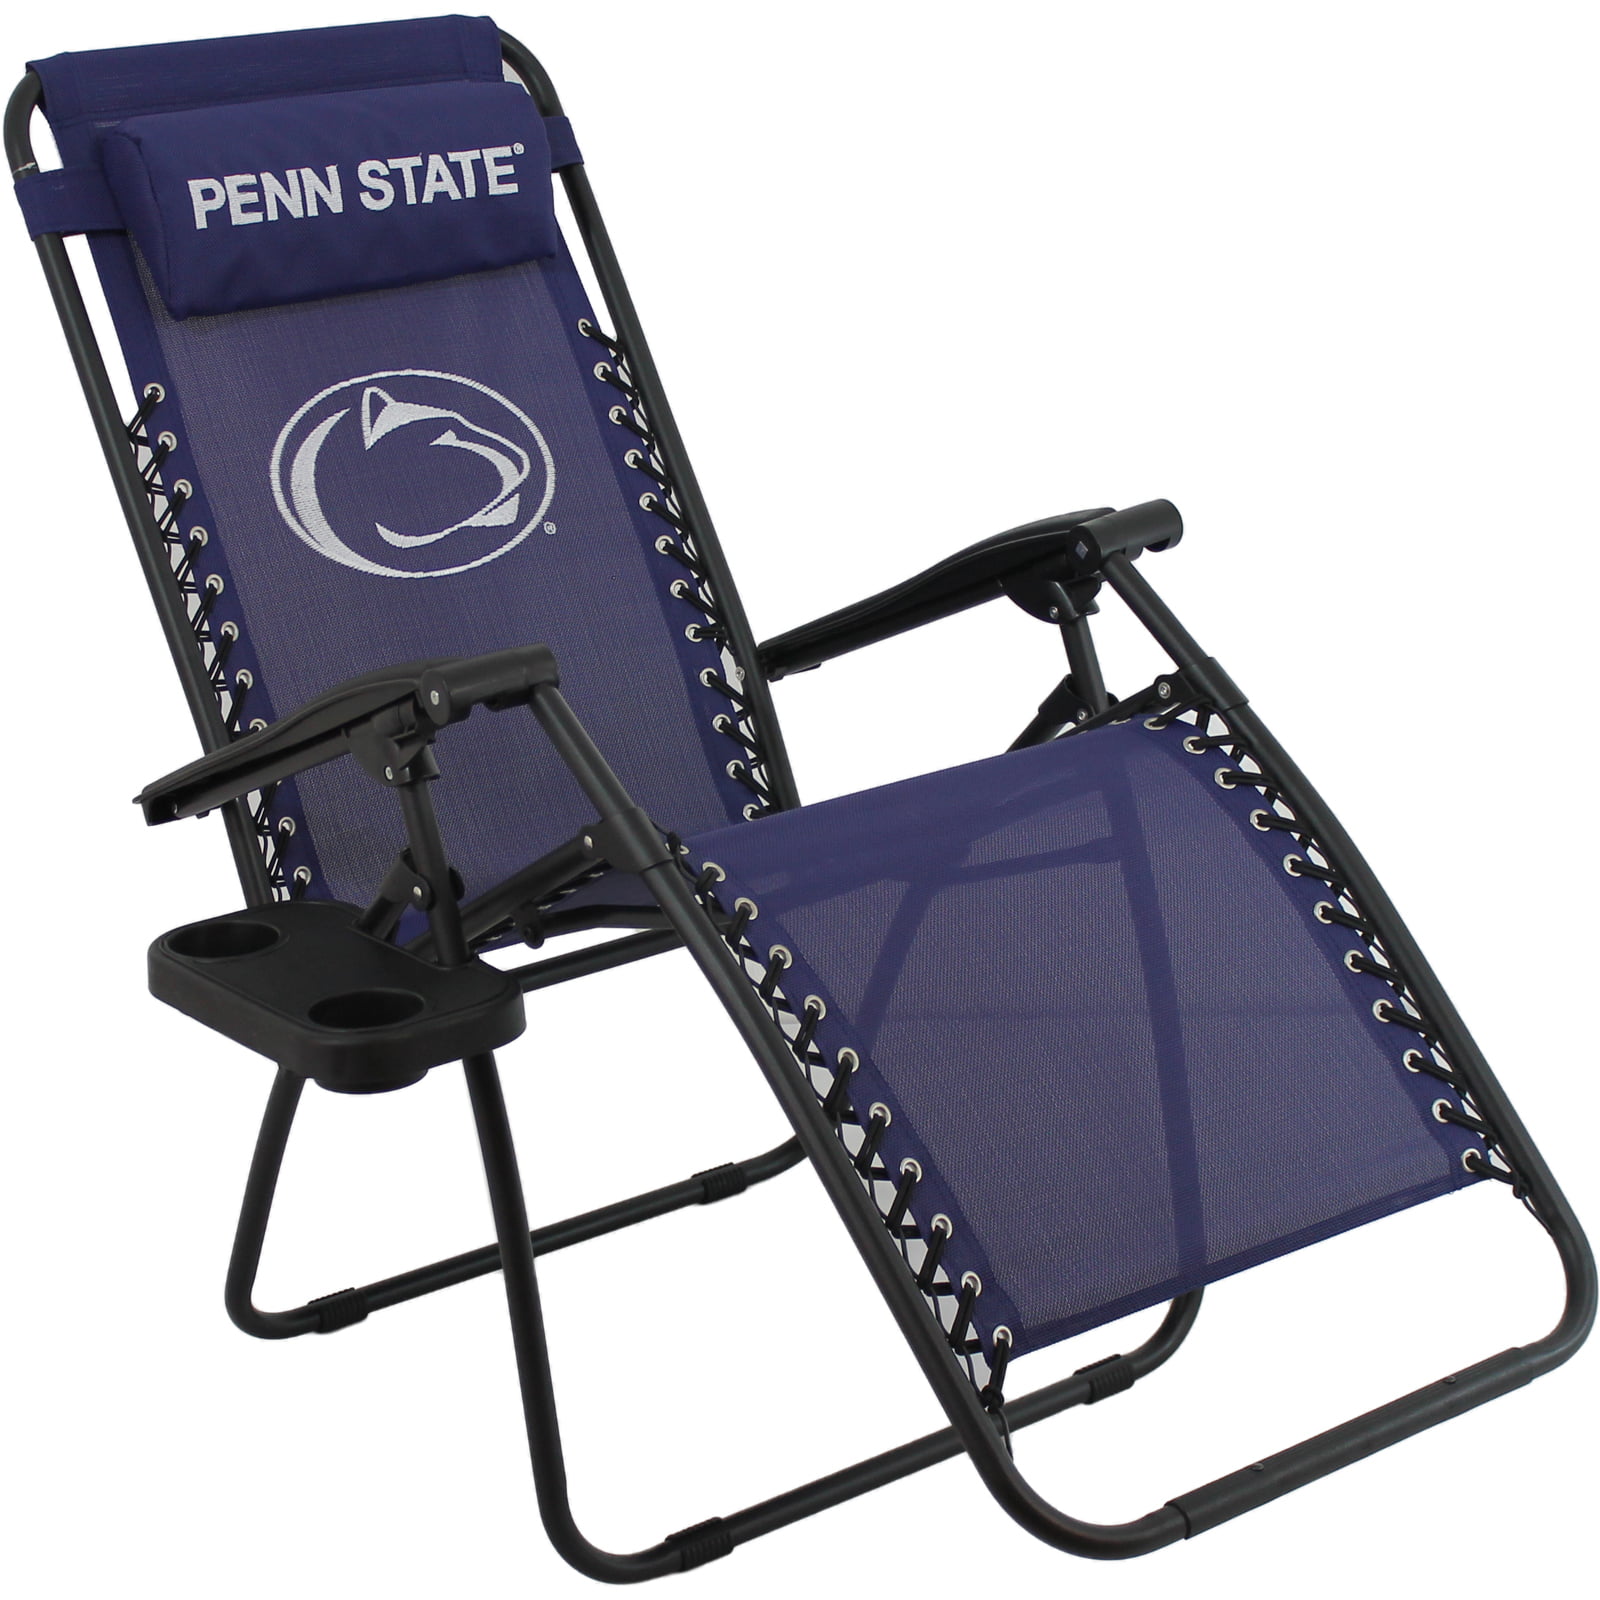 Penn State Nittany Lions Zero Gravity Chair Walmart Com Walmart Com